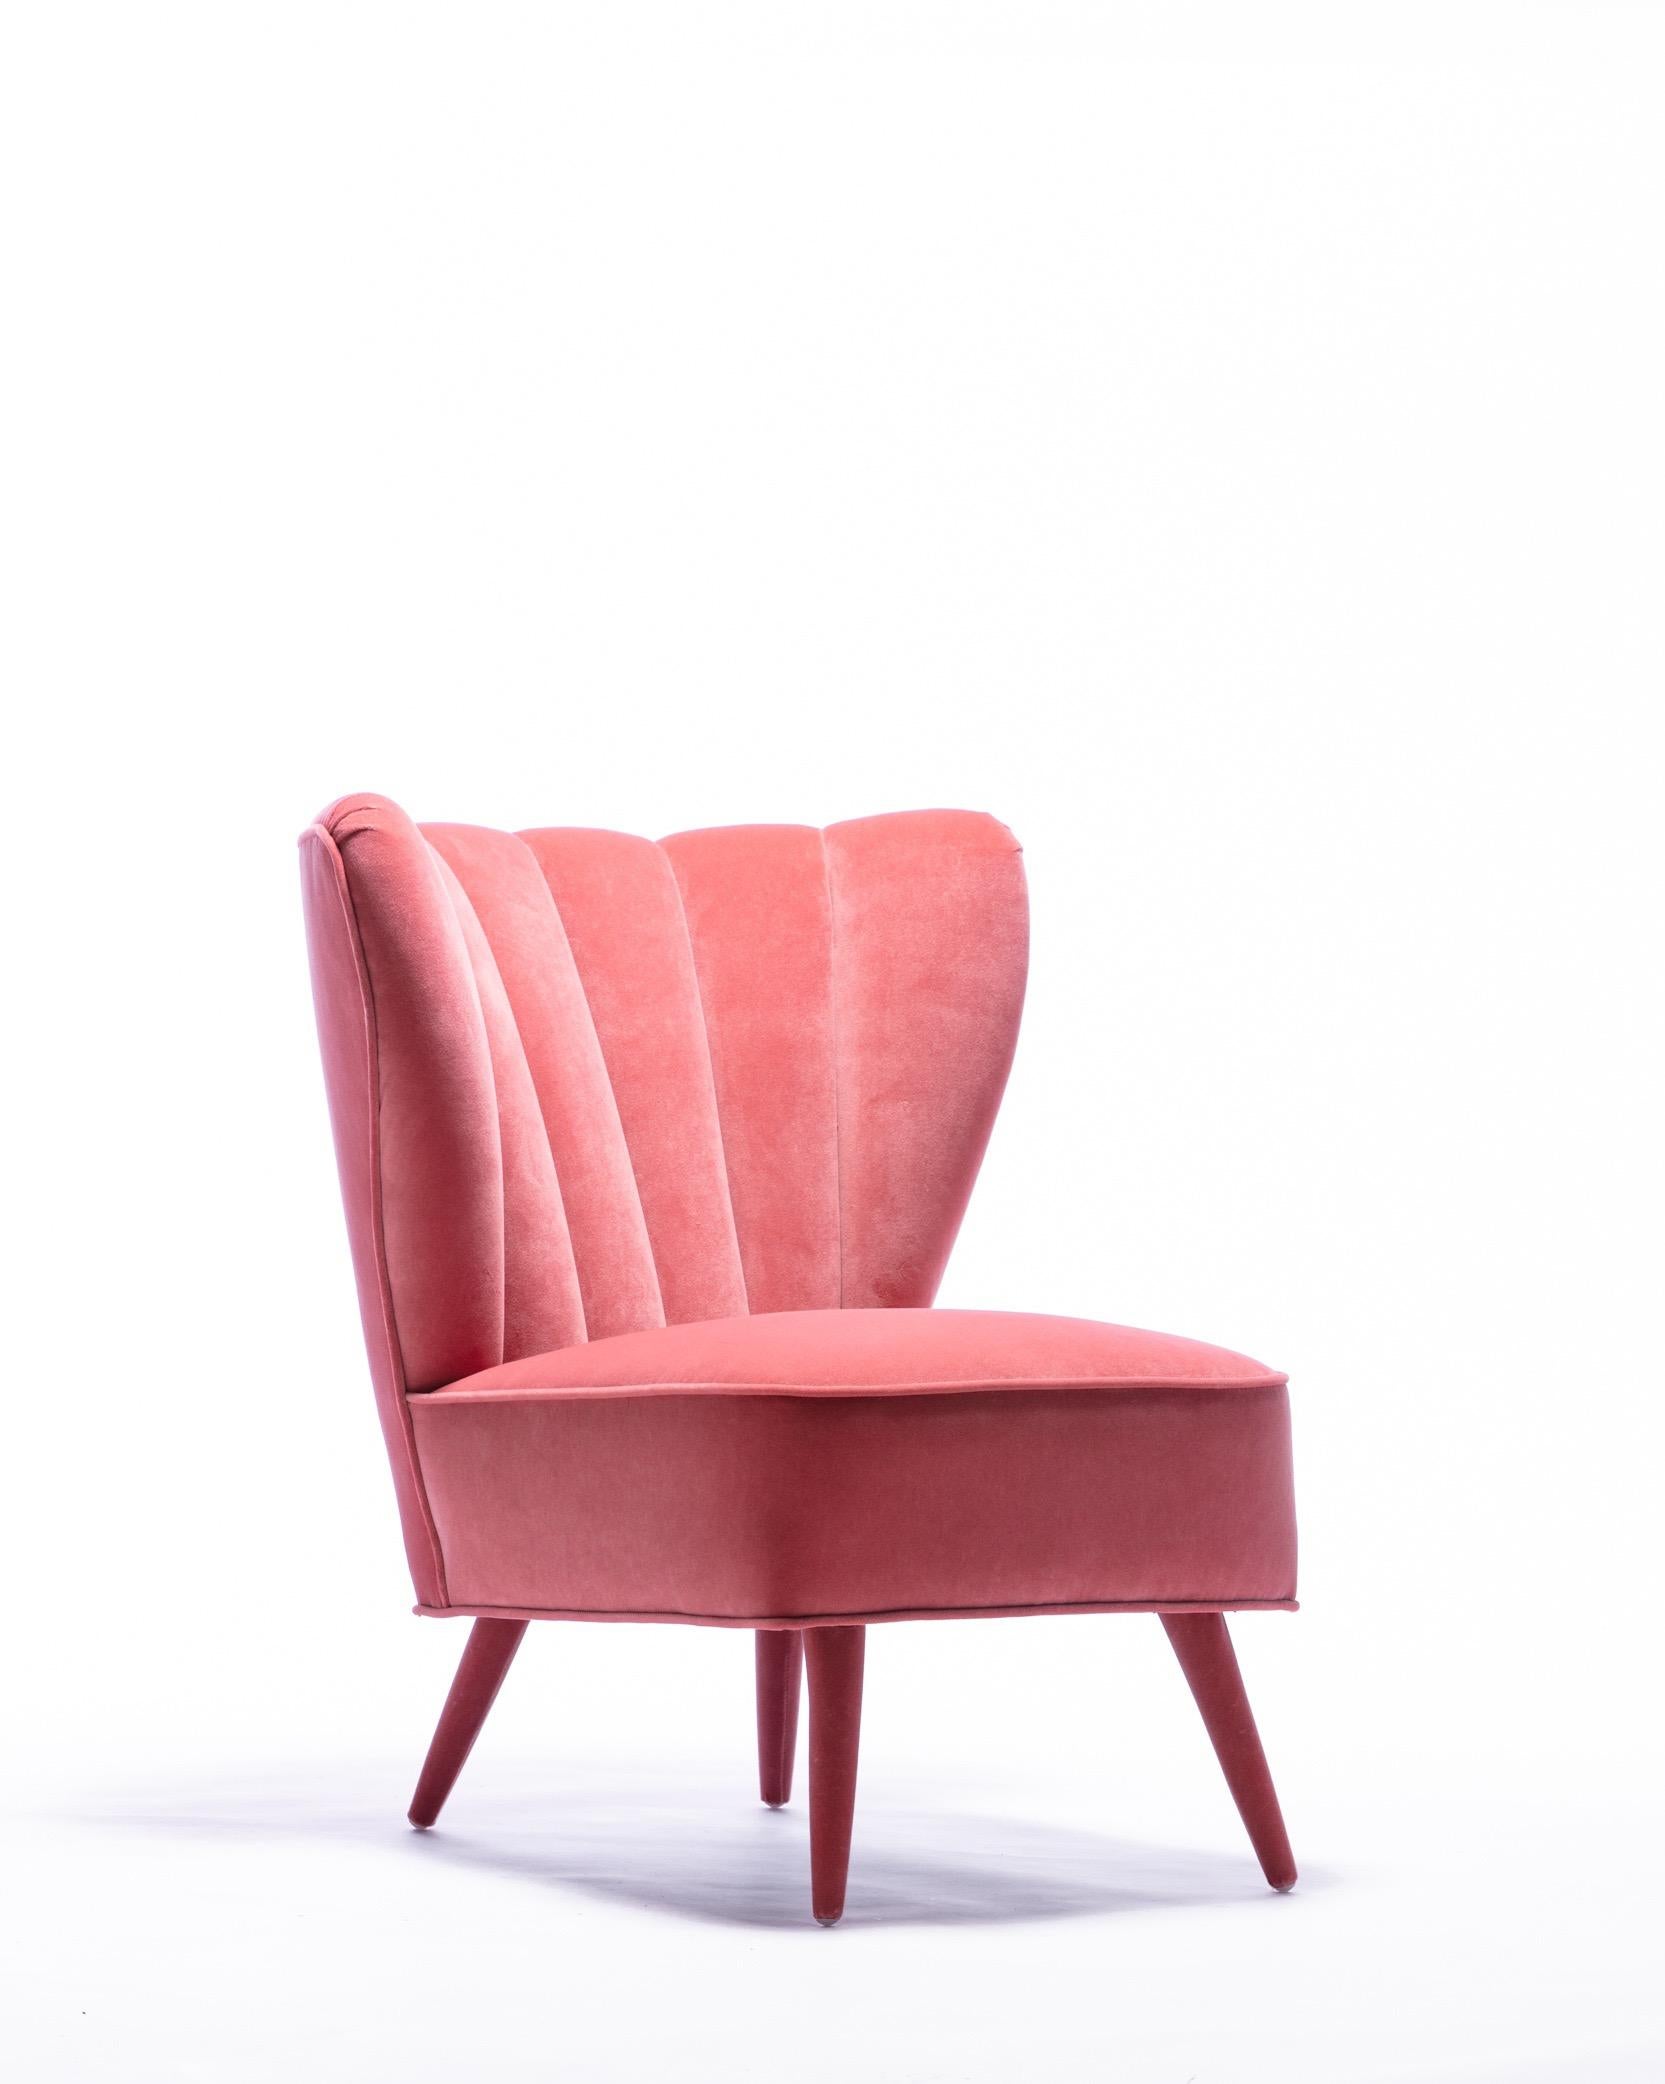 20th Century Chic Vintage Rose Pink Velvet Italian Slipper Chair, circa 1950